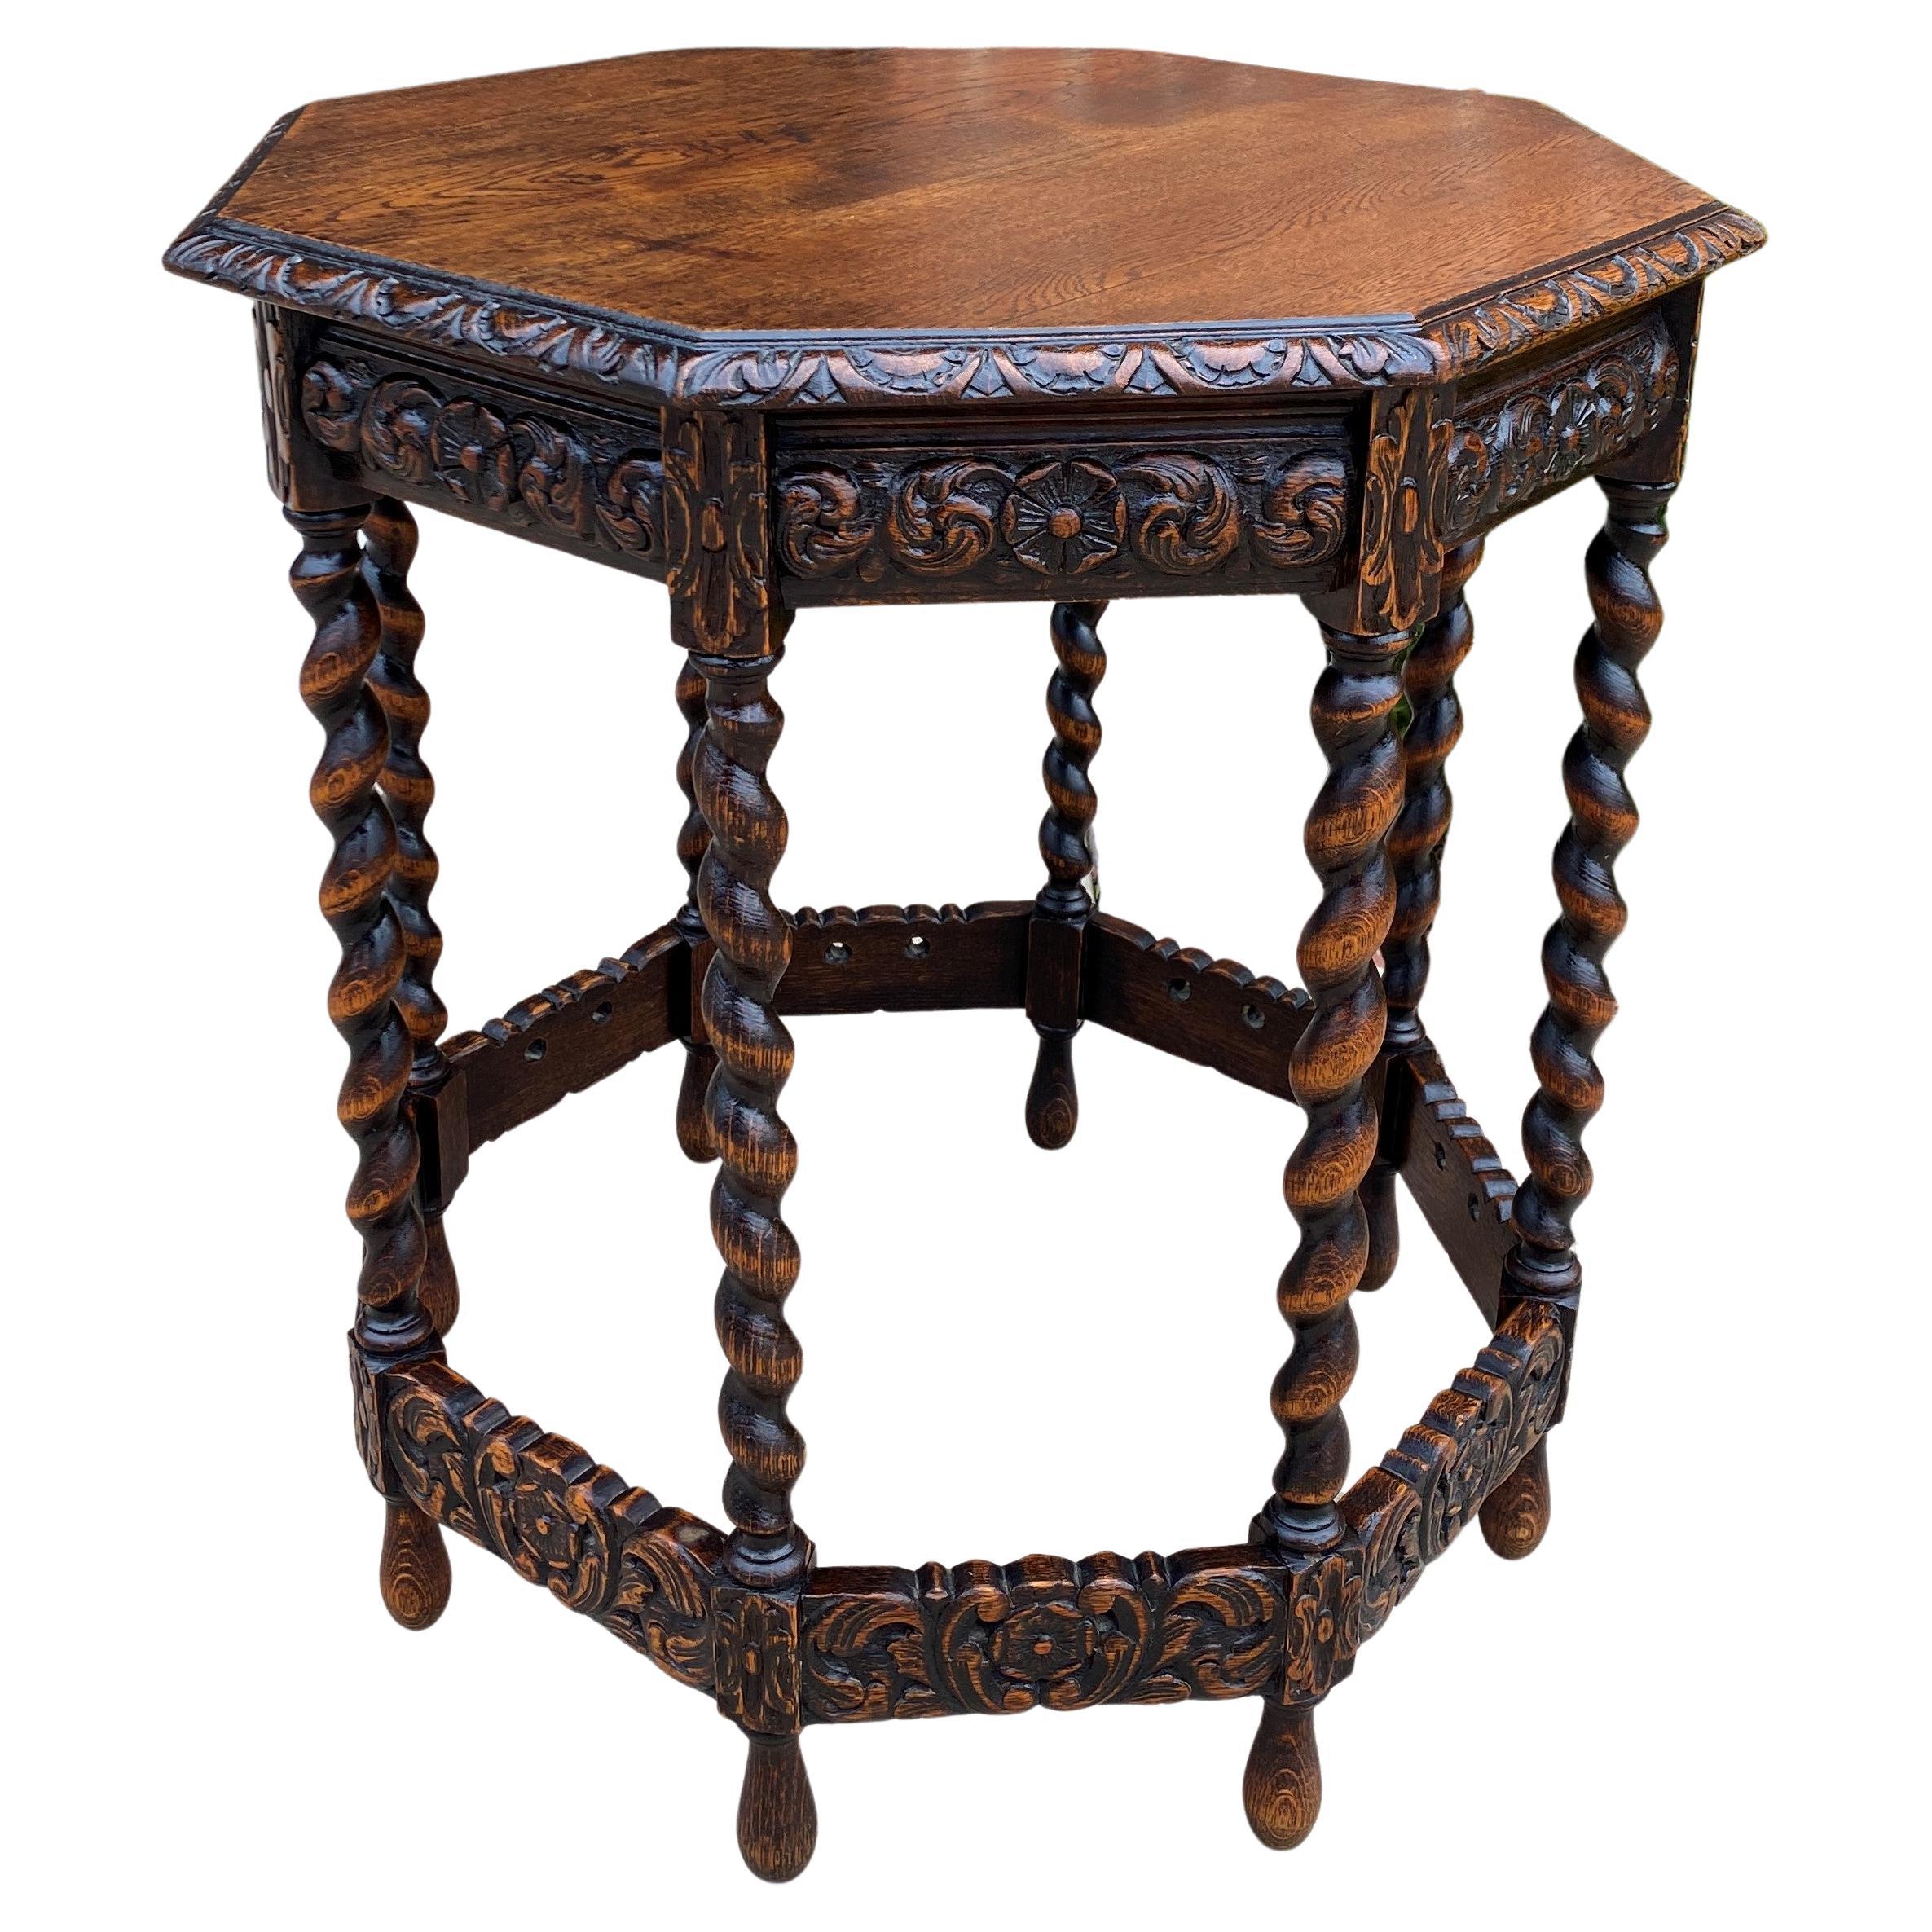 Antique French Table Barley Twist Octagonal Carved Oak Renaissance Revival